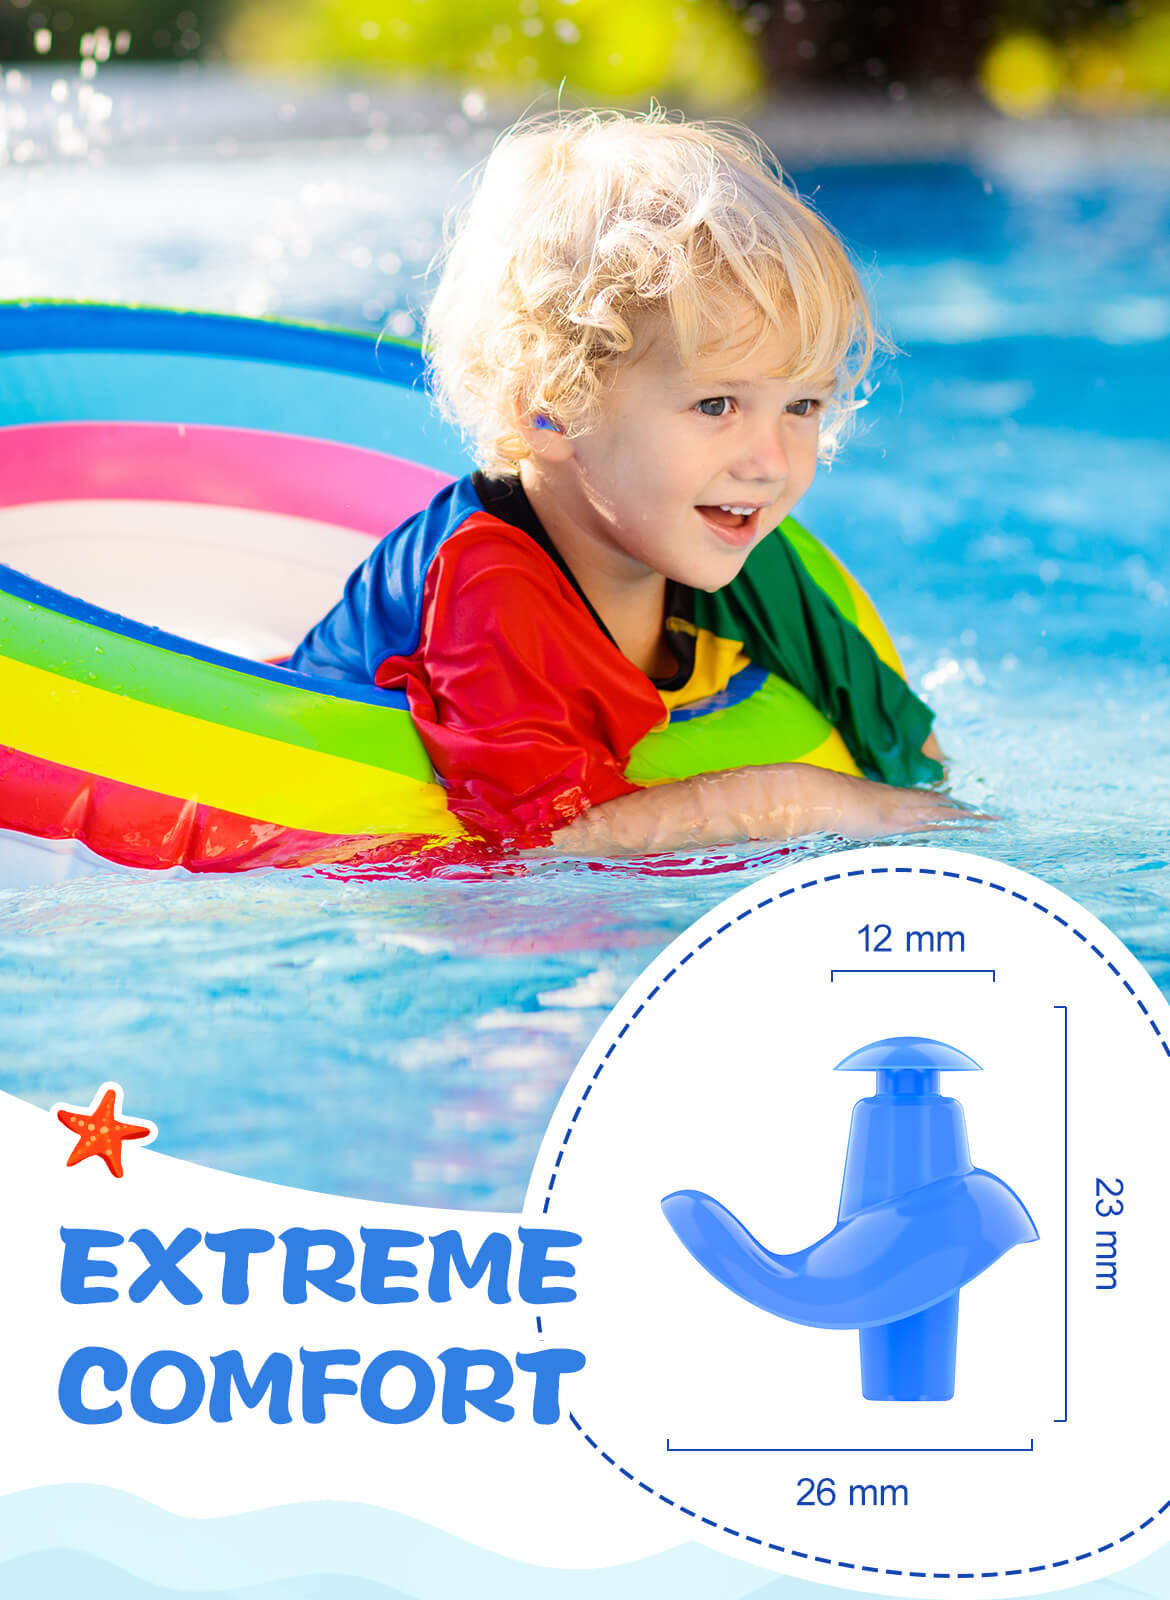 Hearprotek 3 Pairs Waterproof Reusable Swimming Ear Plugs for Kids